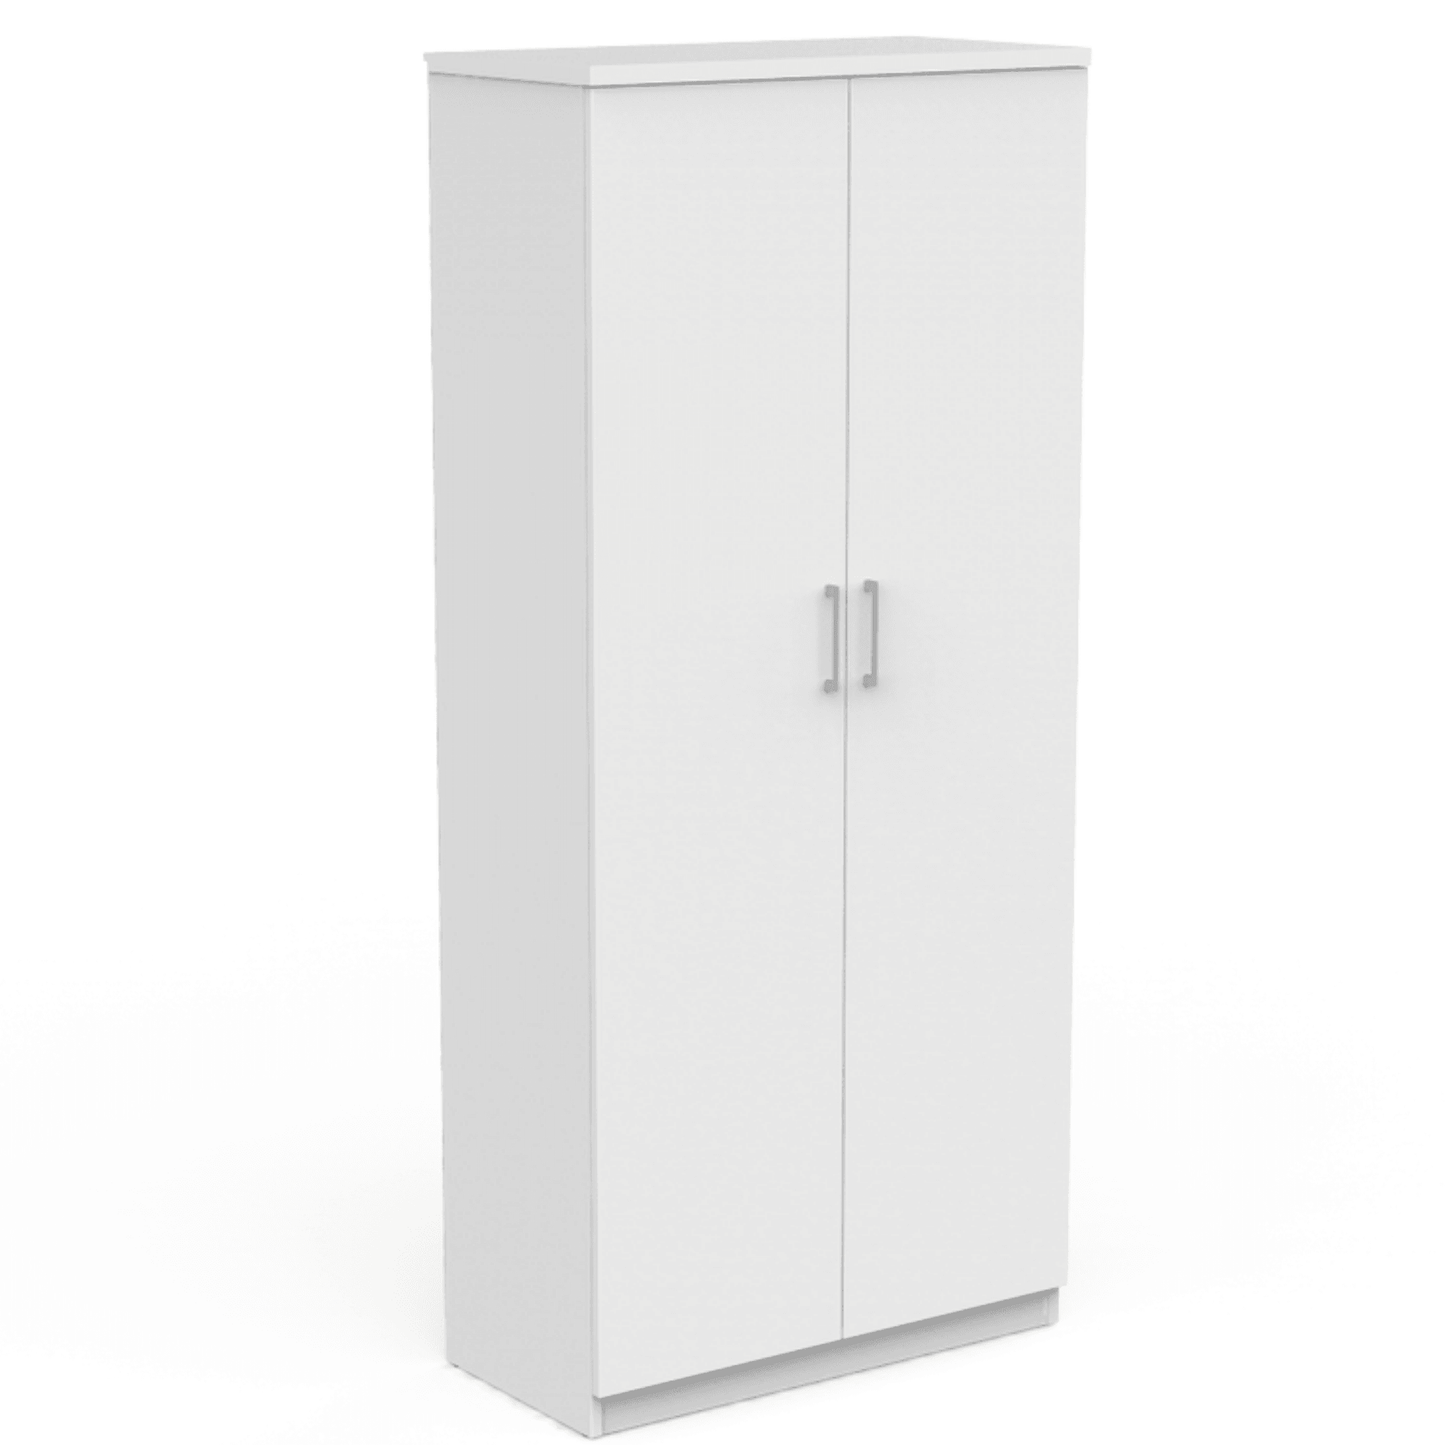 EkoSystem Cupboard with Adjustable Shelves - Office Furniture Company 